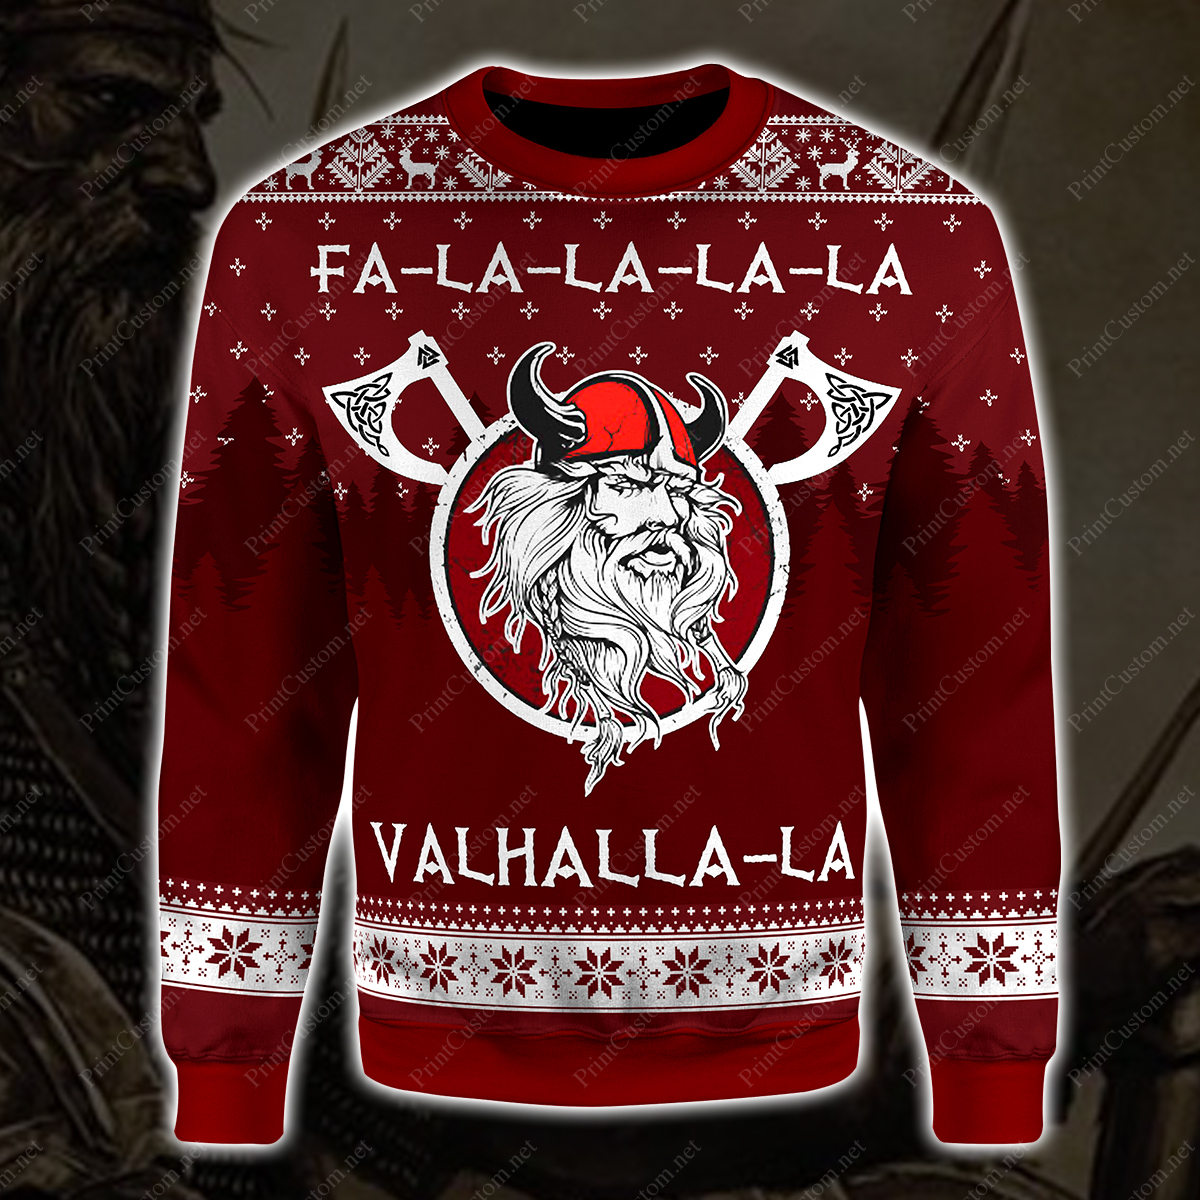 Fa-la-la-la-la valhalla-la viking ugly christmas sweater 4